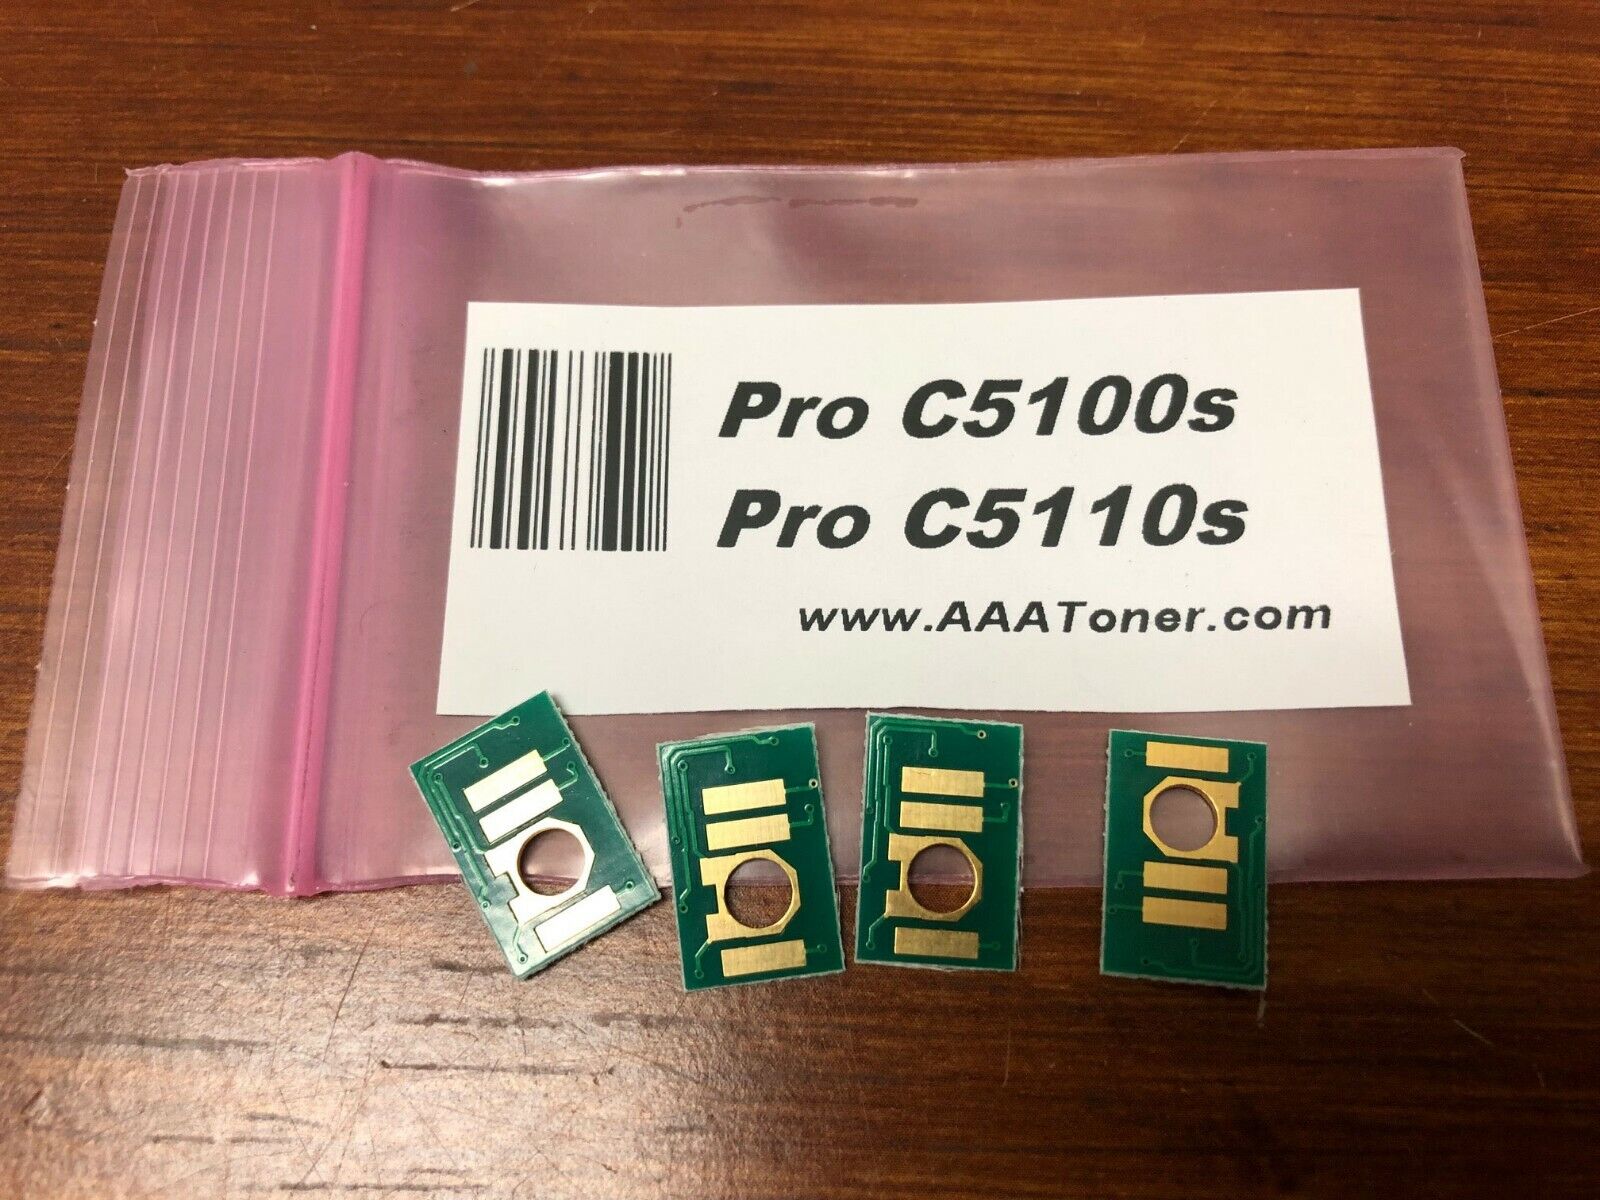 Toner Chips for Ricoh Pro C5100s, Pro C5110s - 4pk (828350 ~ 828353) Refill